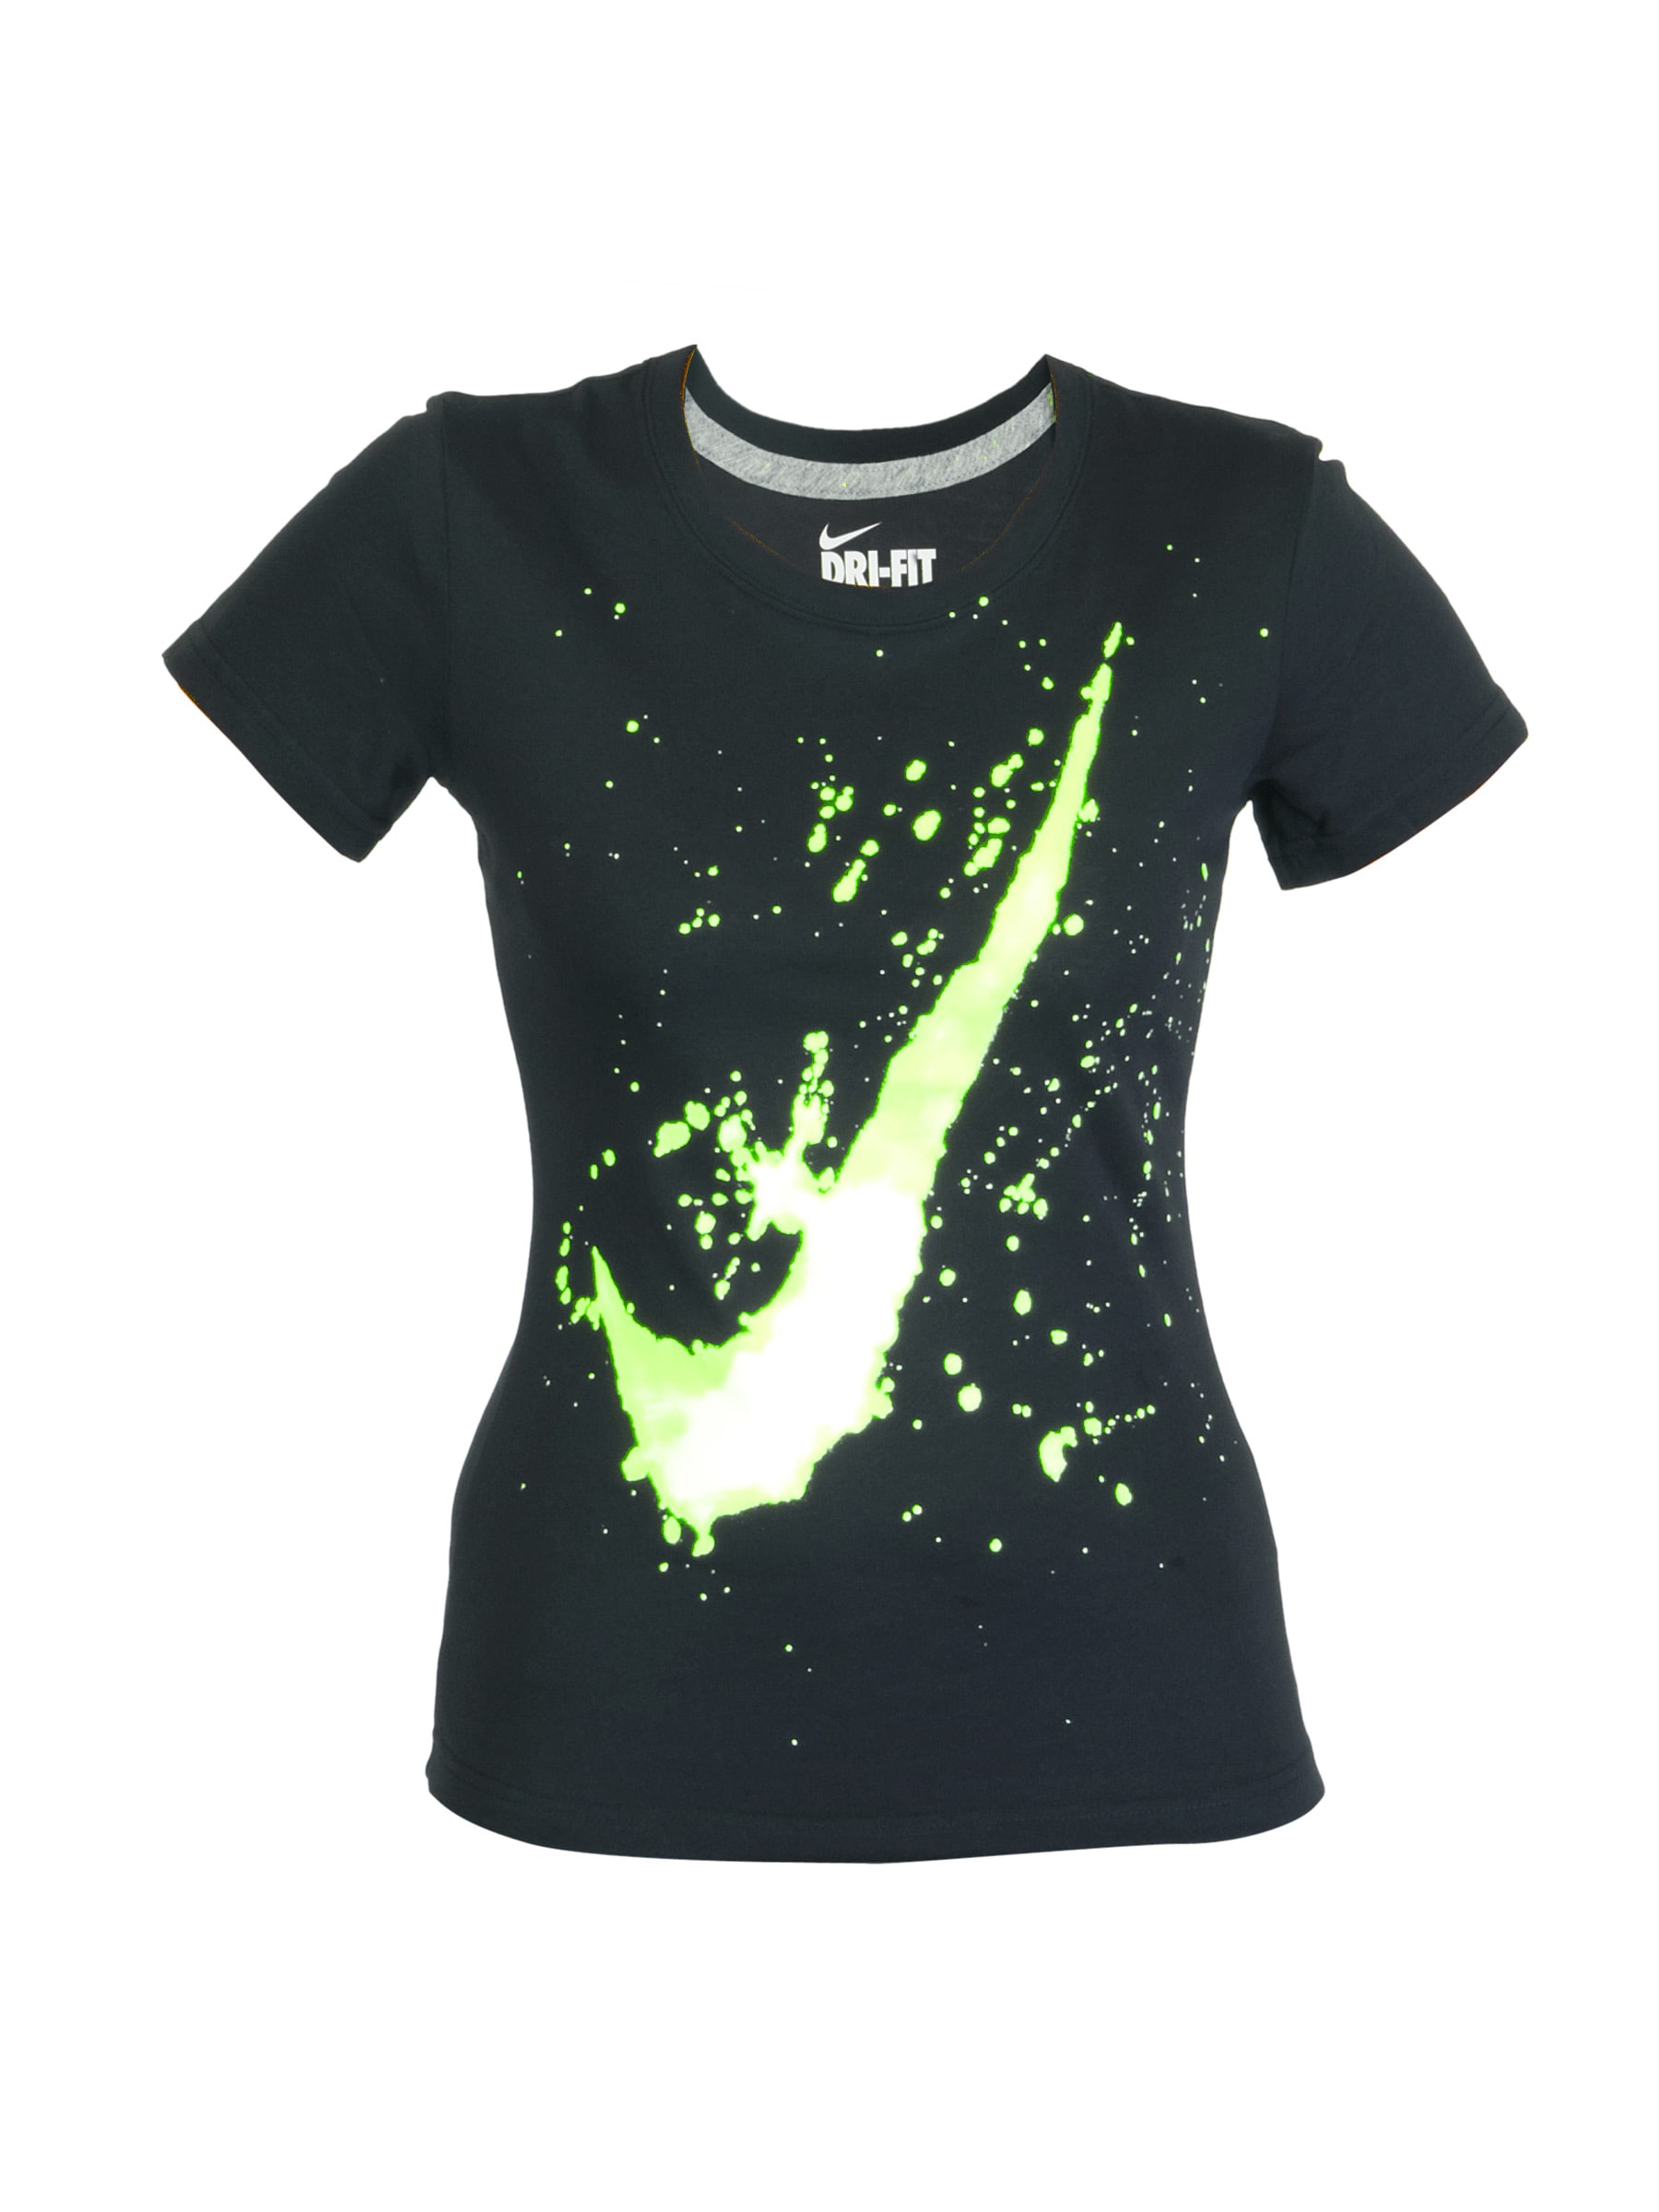 Nike Women Bleach Black T-shirt